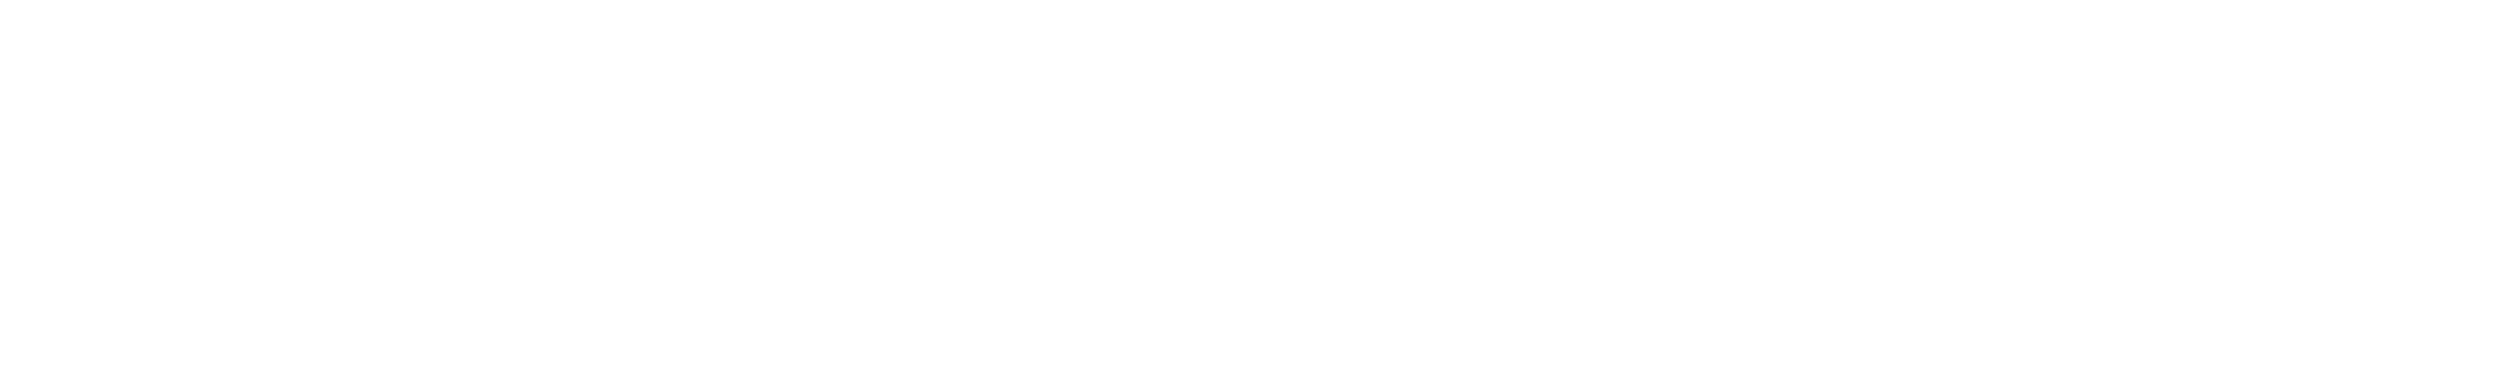 University at Buffalo School of Management logo